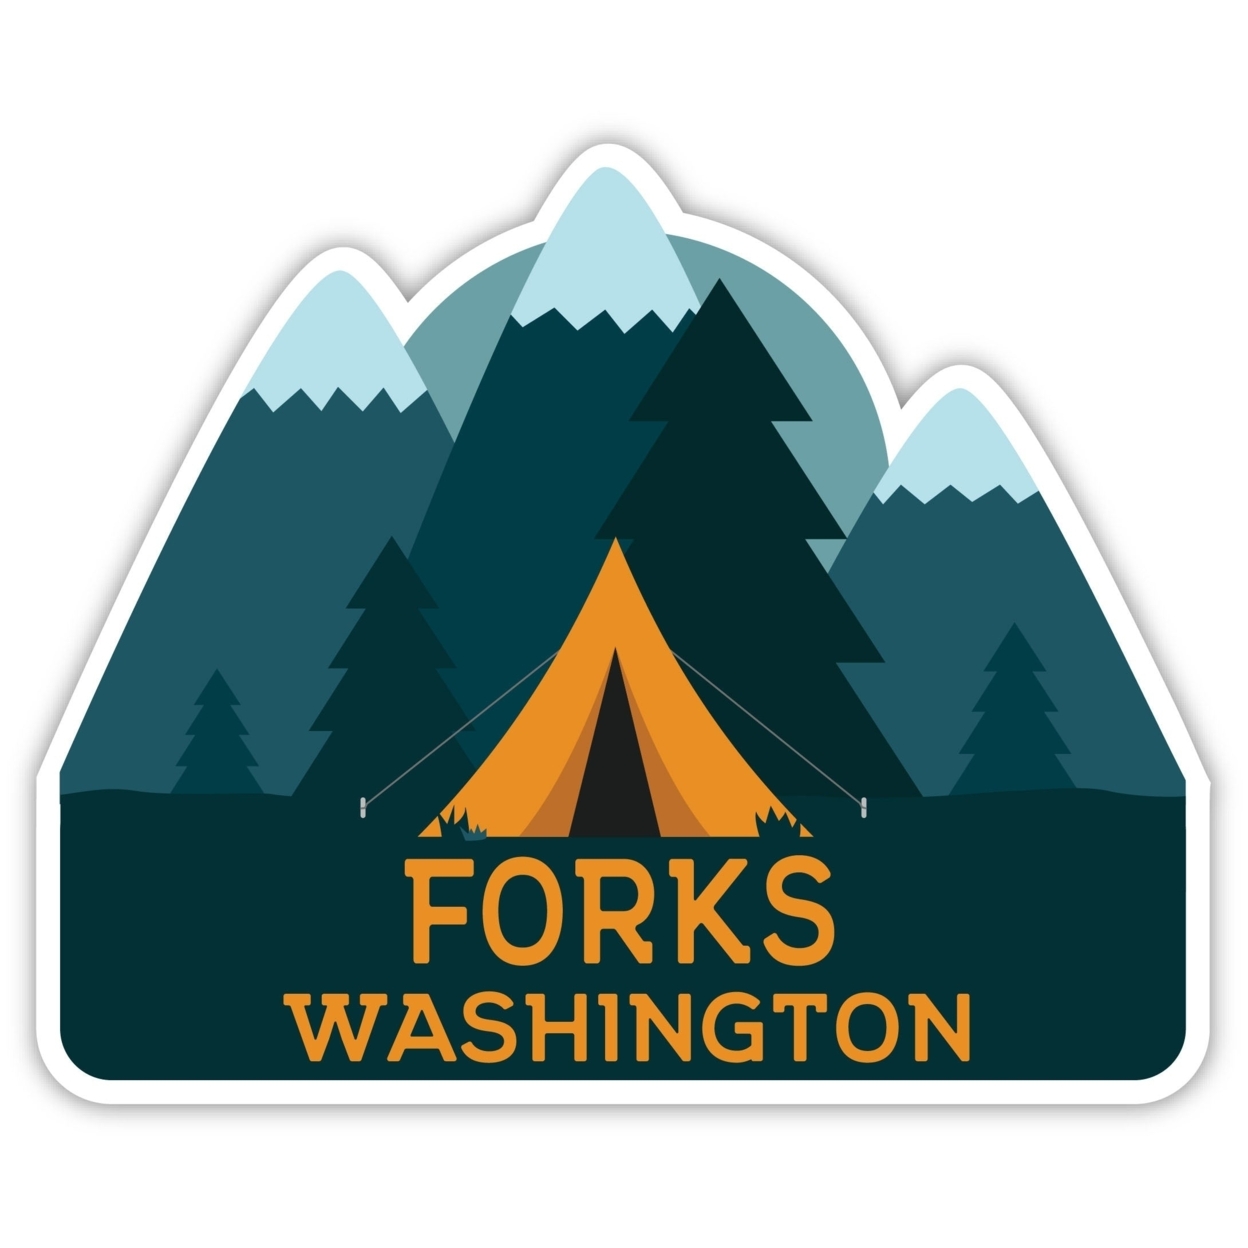 Forks Washington Souvenir Decorative Stickers (Choose Theme And Size) - Single Unit, 4-Inch, Camp Life